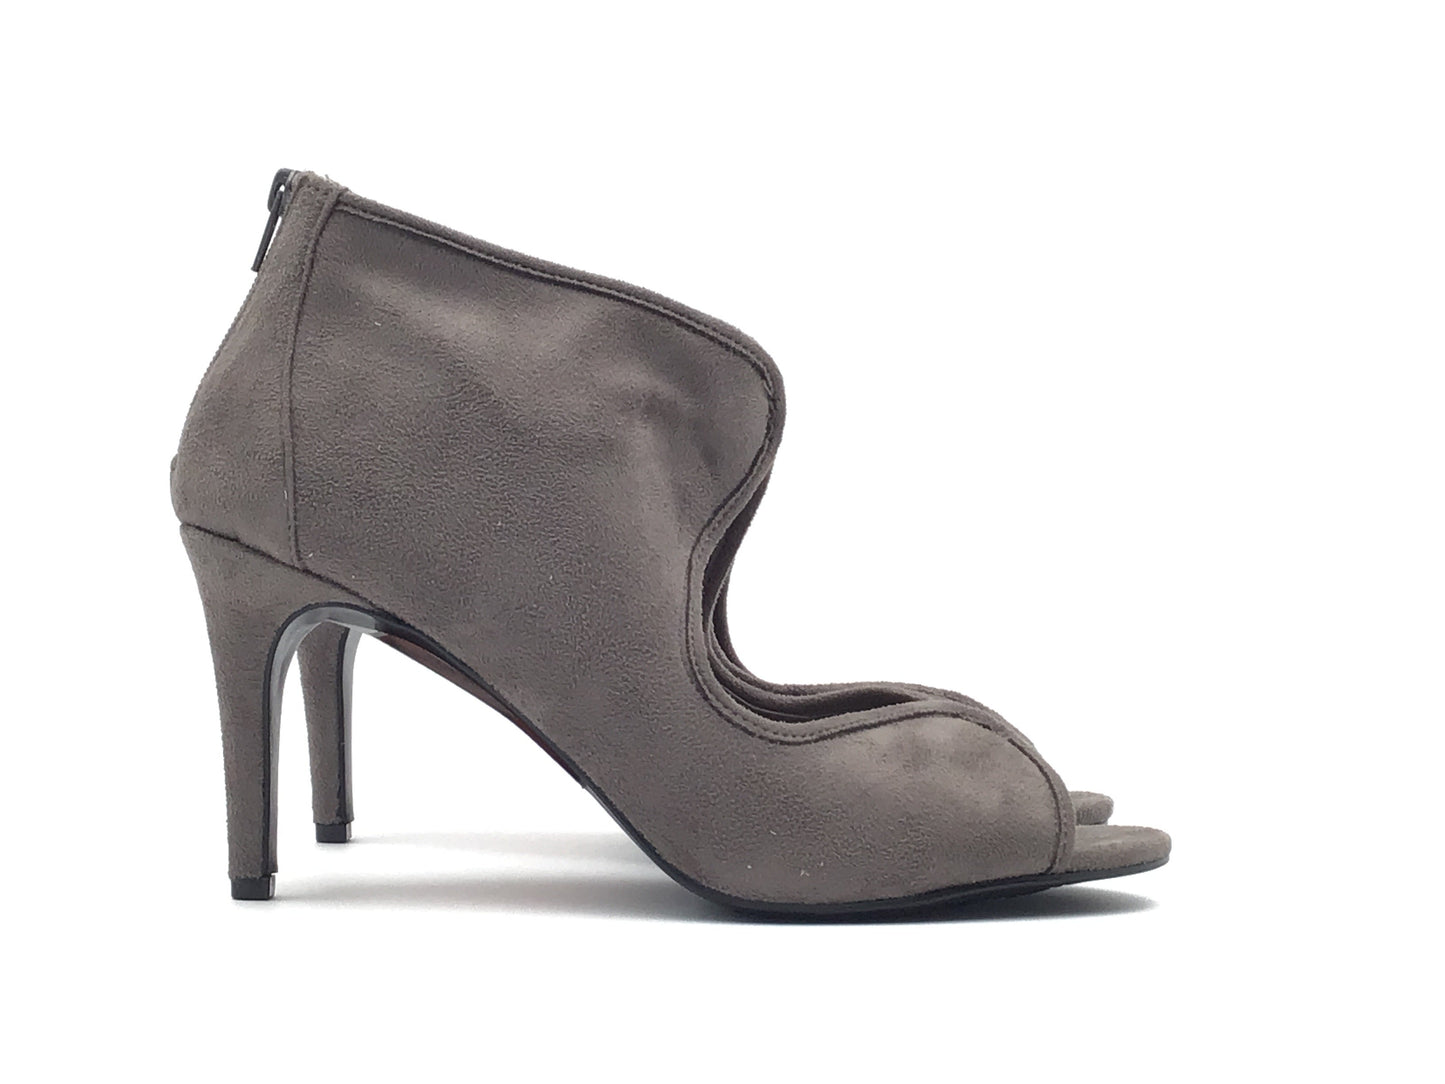 Grey Shoes Heels Stiletto Impo, Size 8